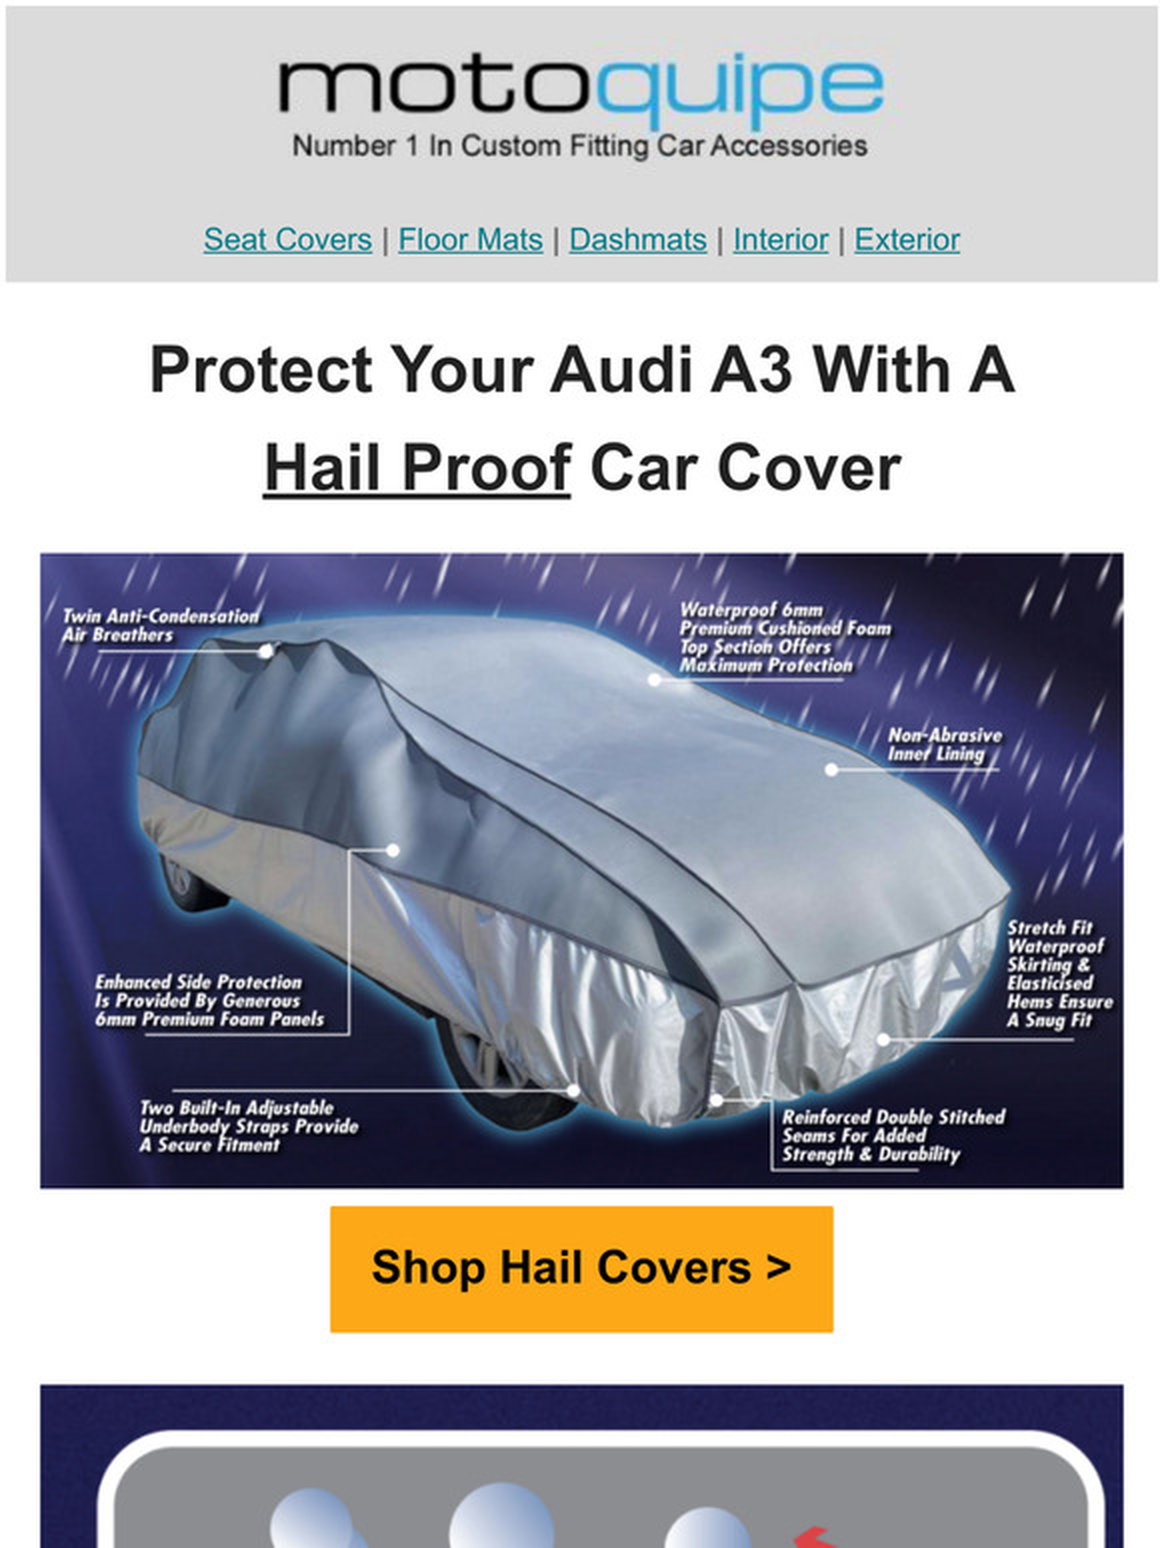 Motoquipe: New Hail Proof Car Covers